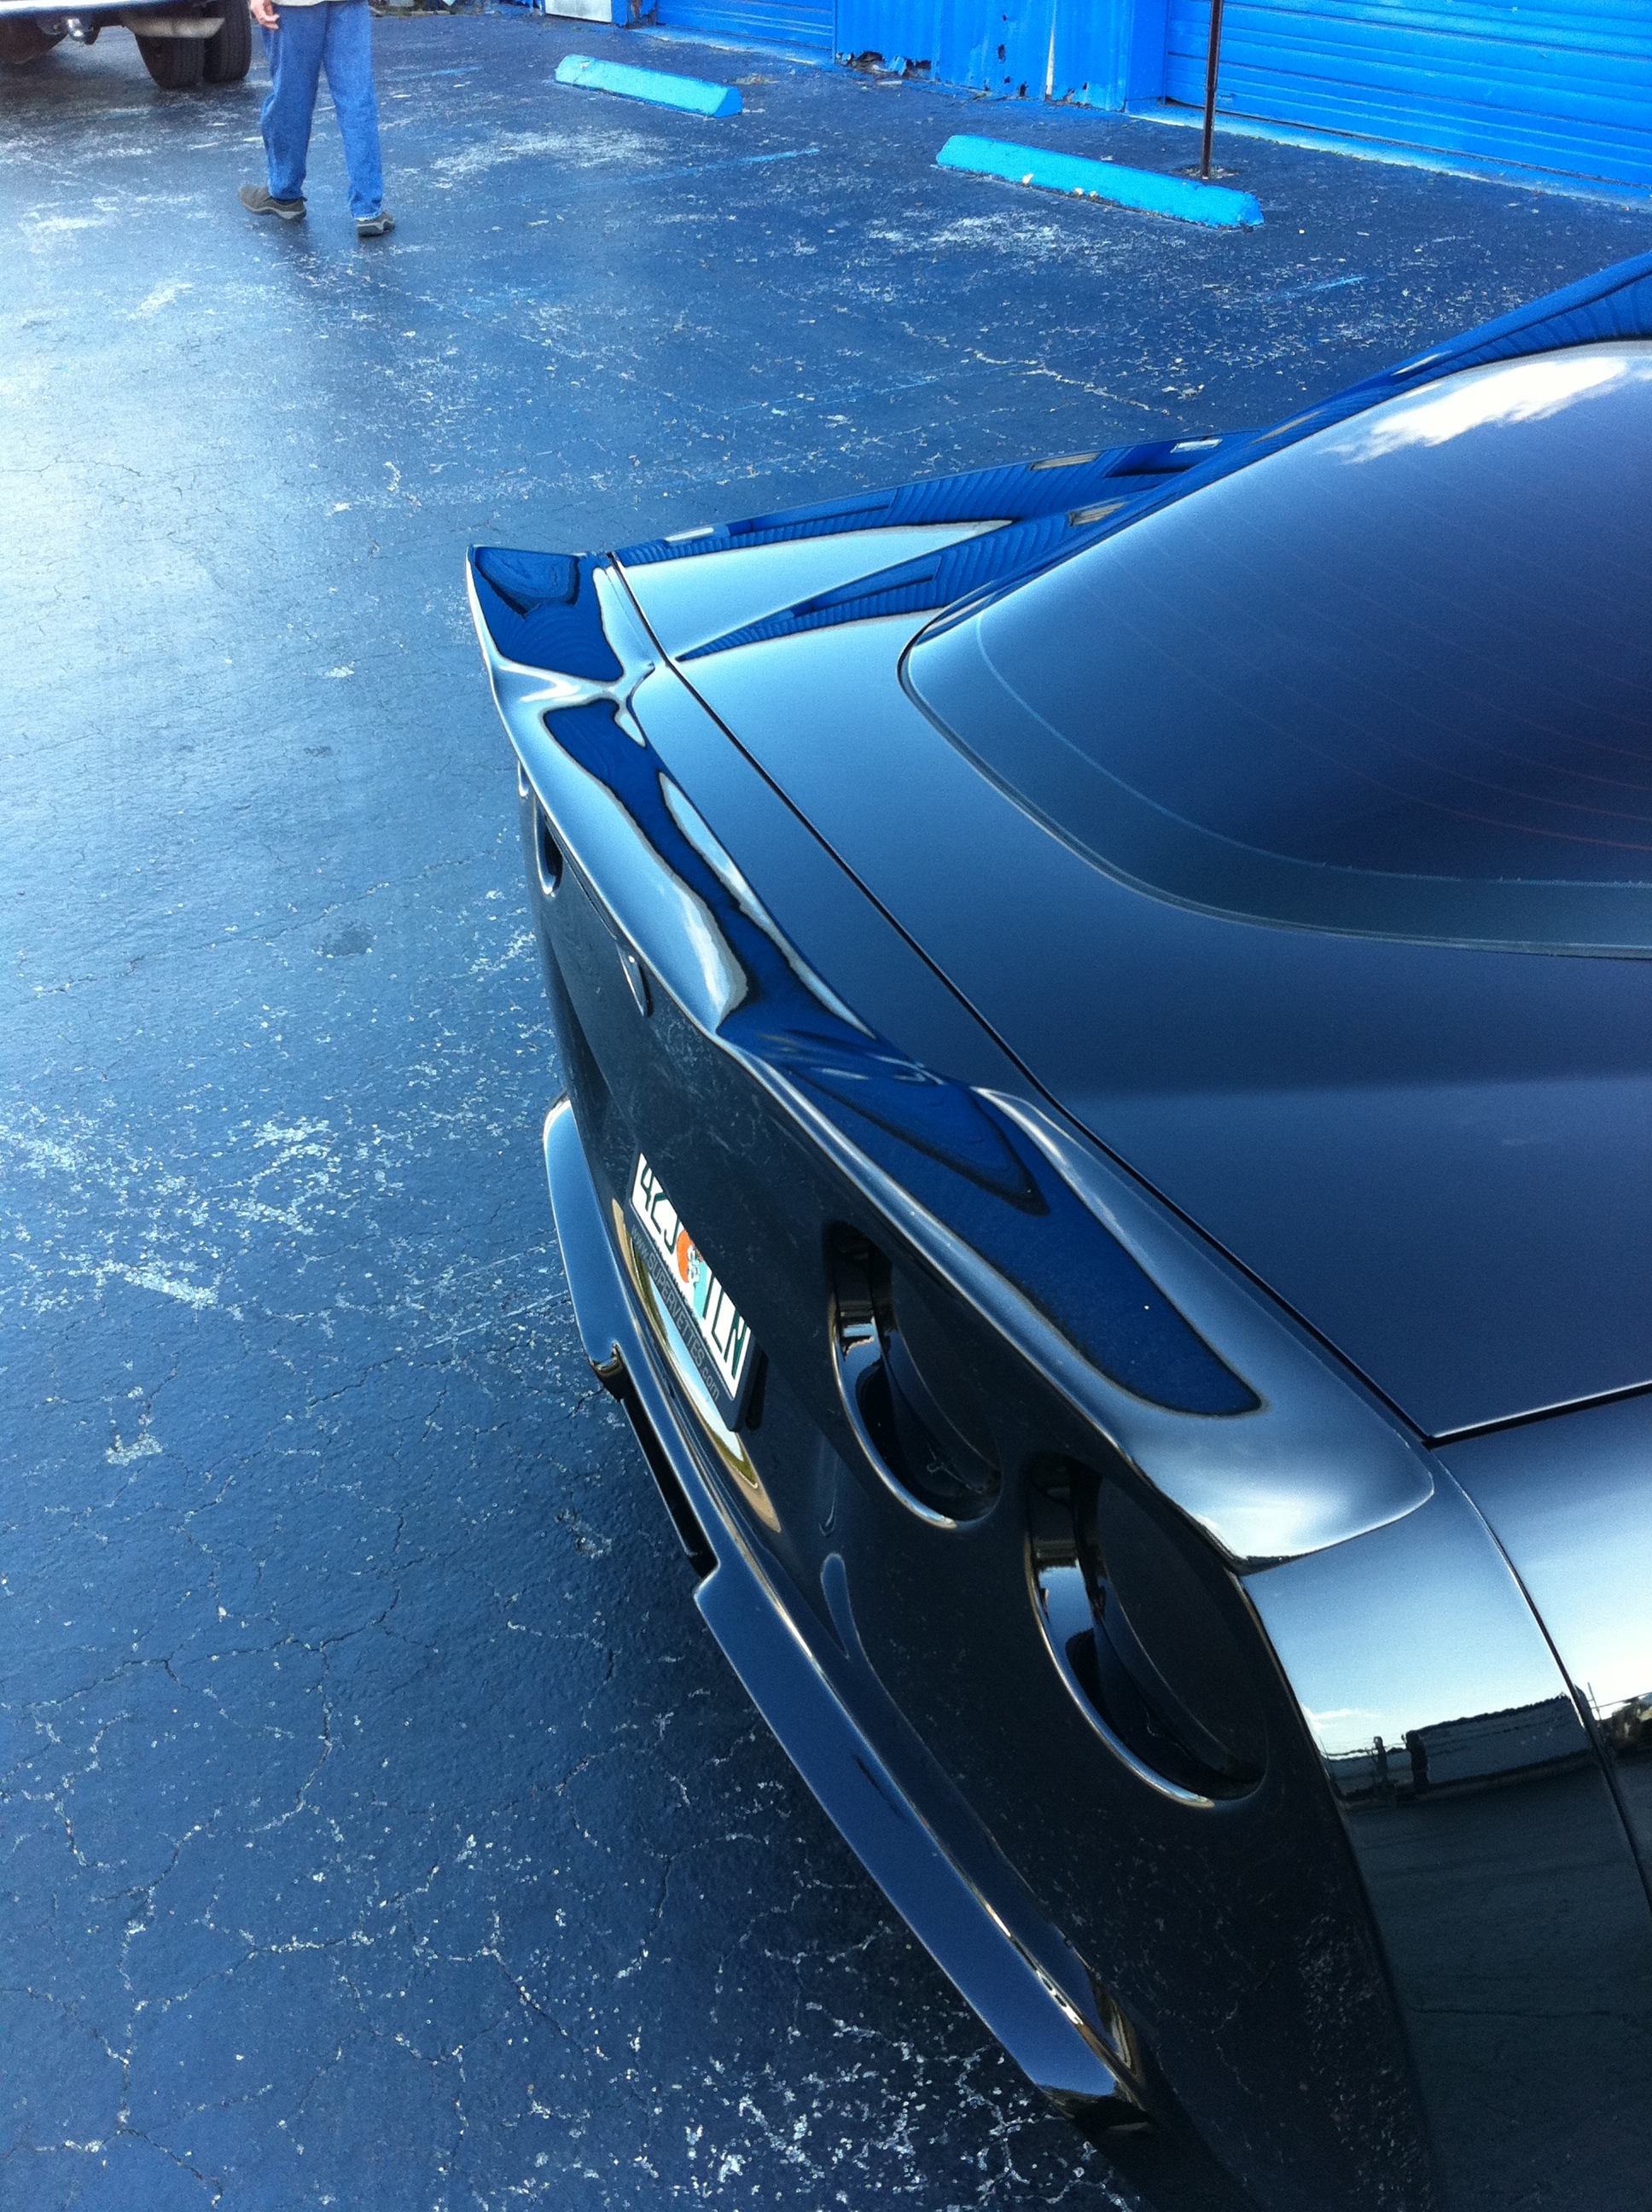 C6 Corvette Performance1936 x 2592